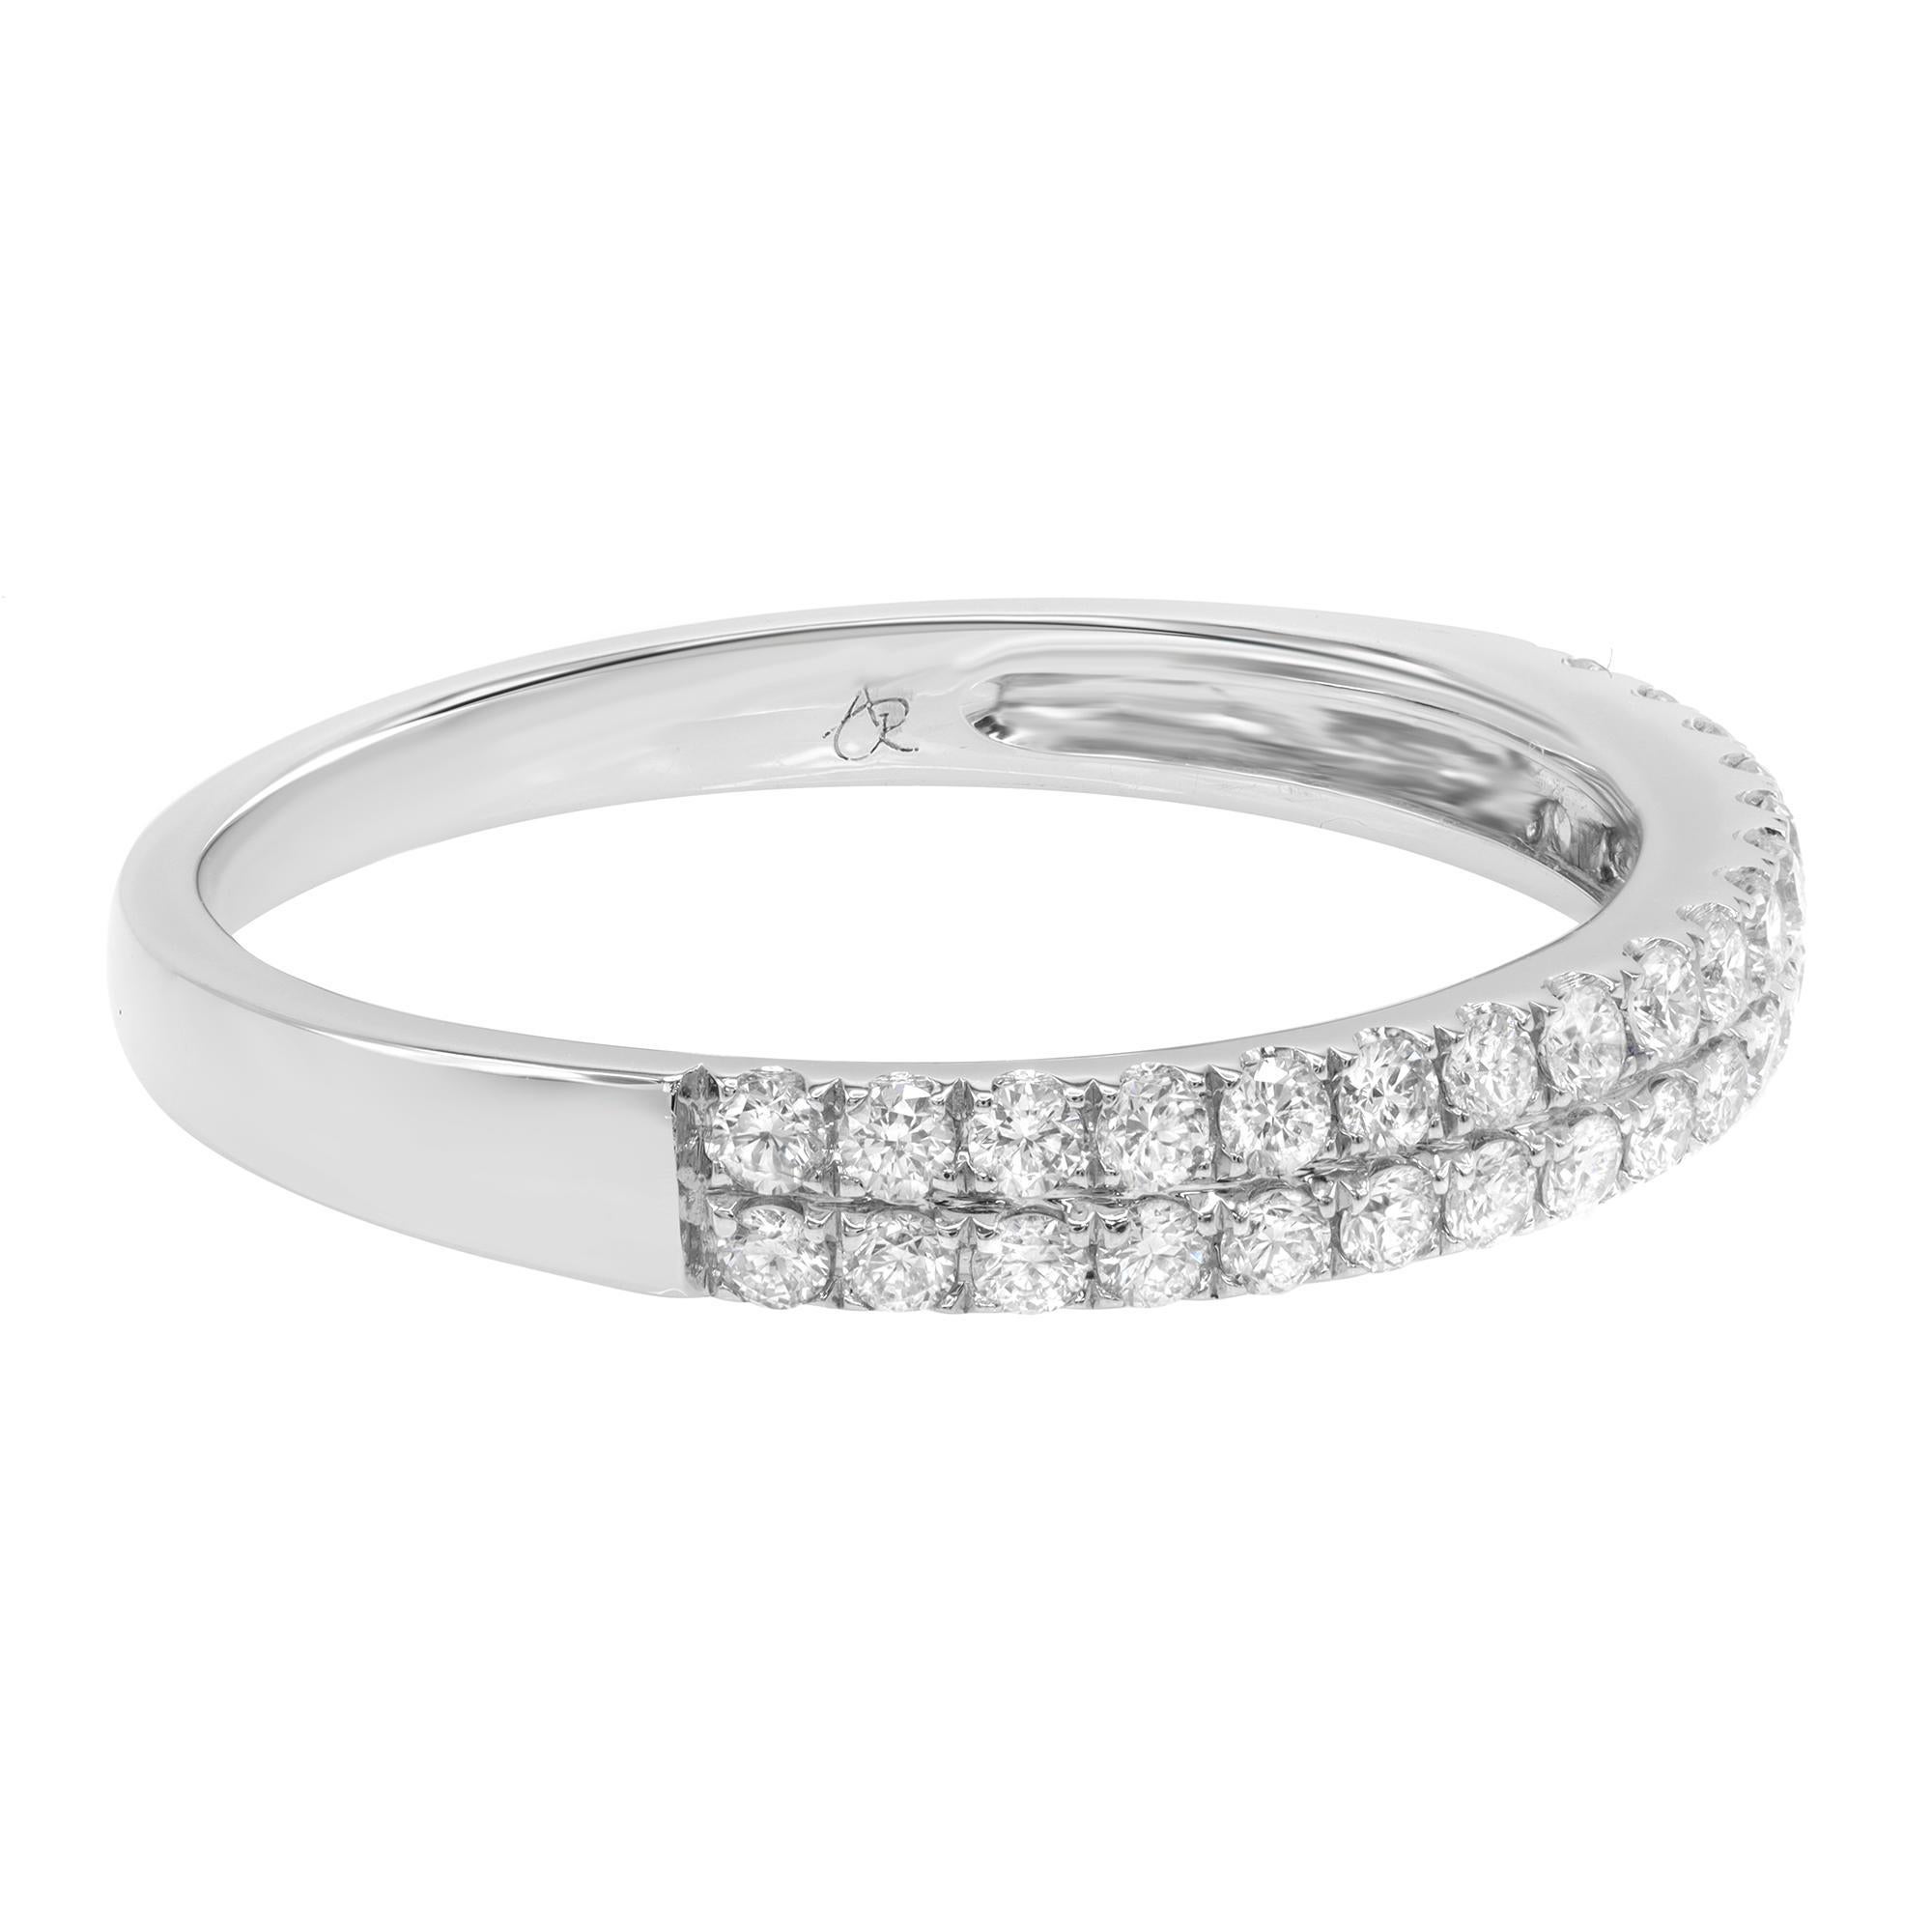 Round Cut Rachel Koen Double Row Pave Diamond Wedding Band Ring 14k White Gold 0.37cttw For Sale